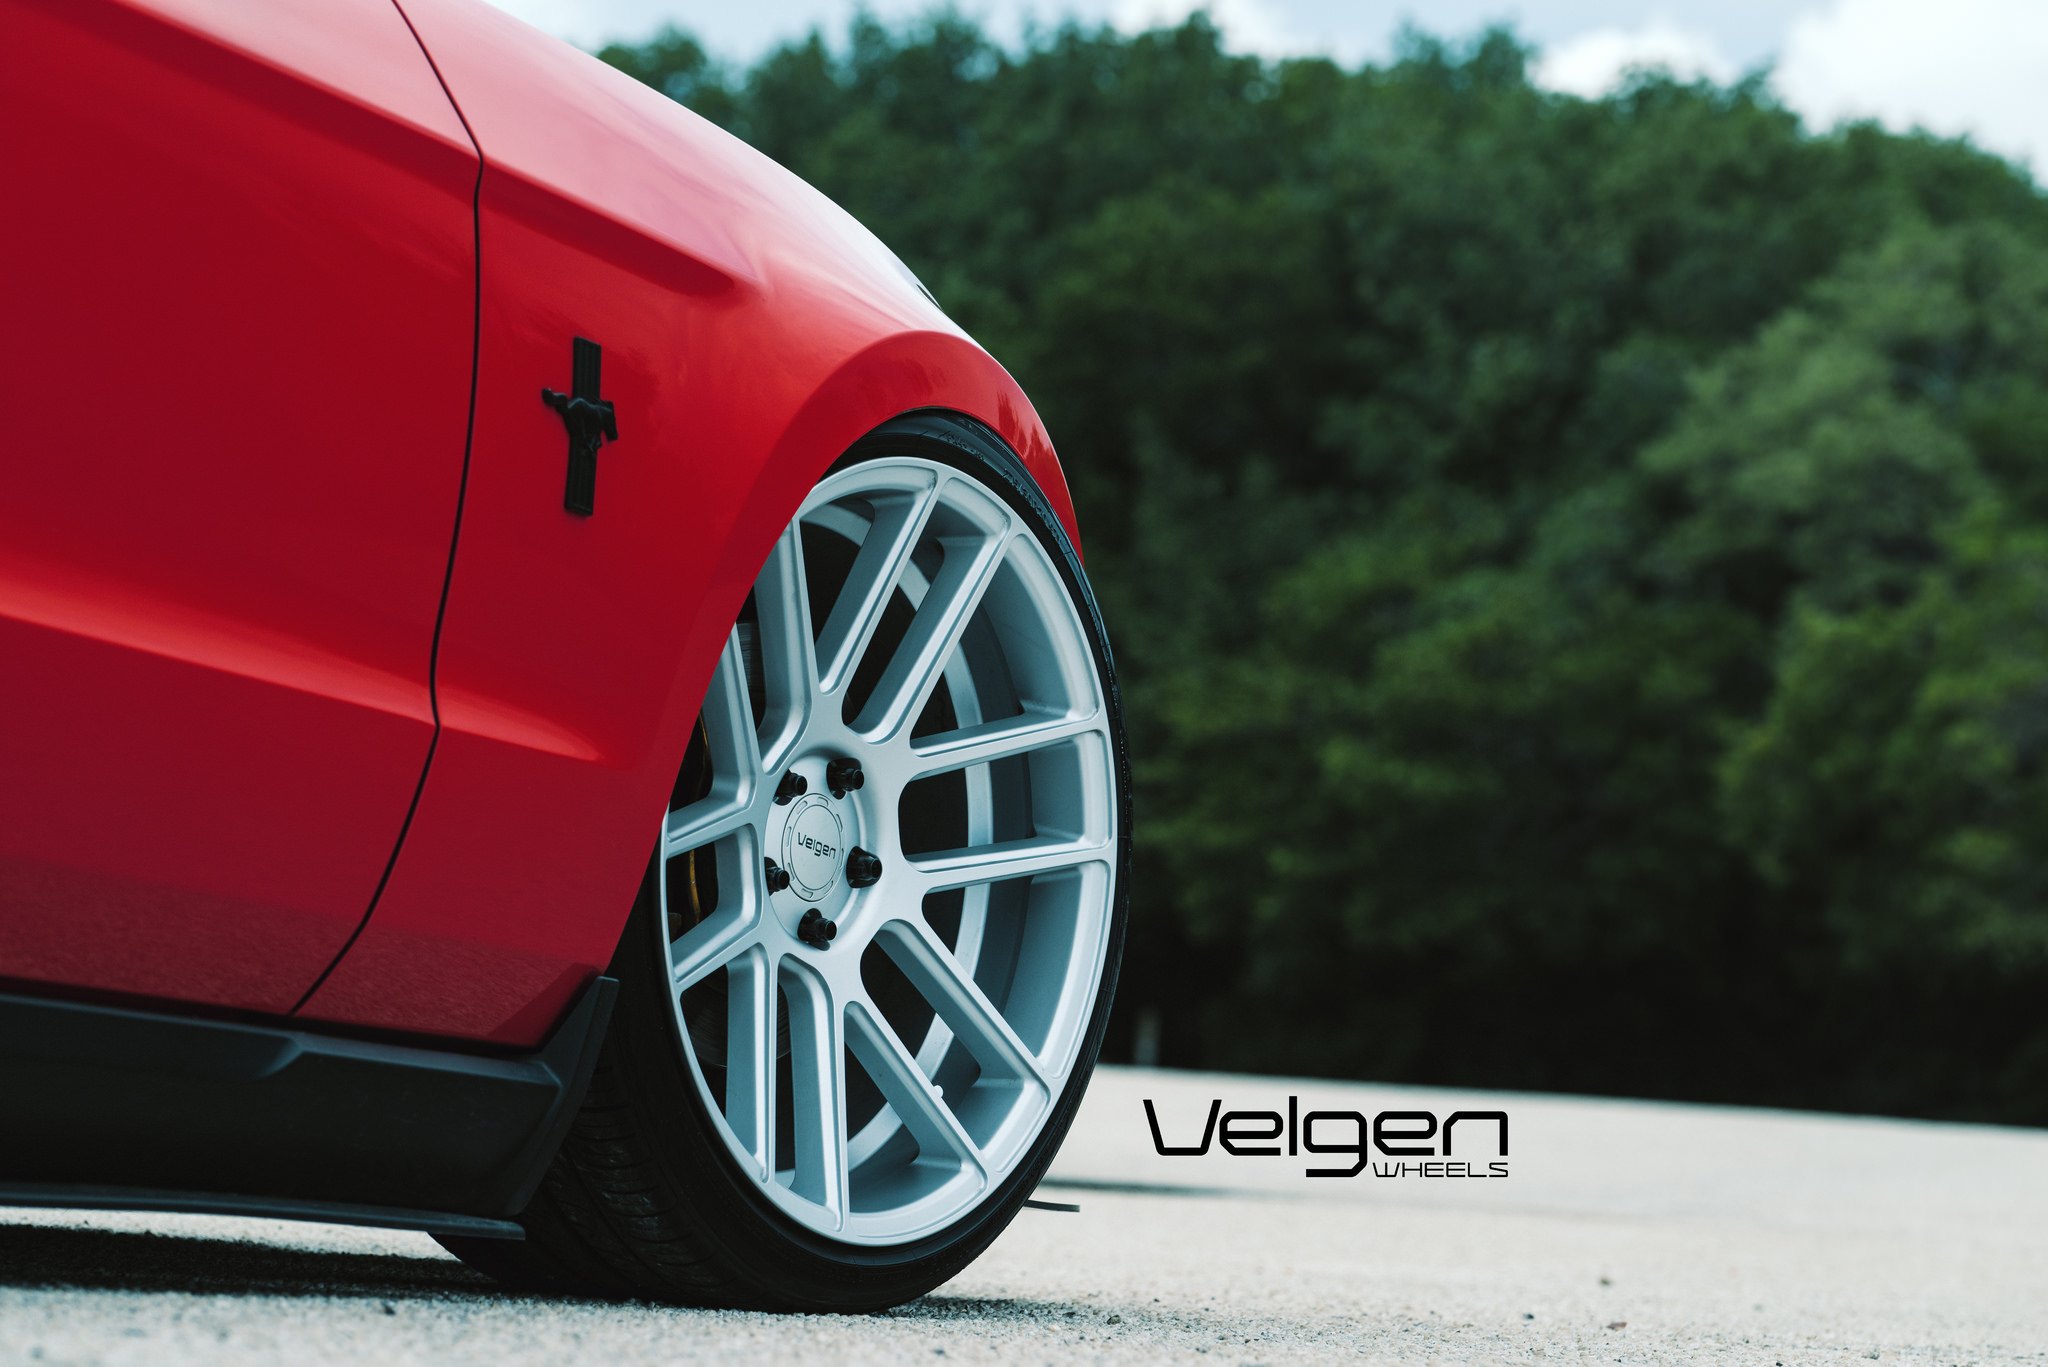 Velgen VMB6 Polished Wheels on Ford Mustang - Photo by Velgen